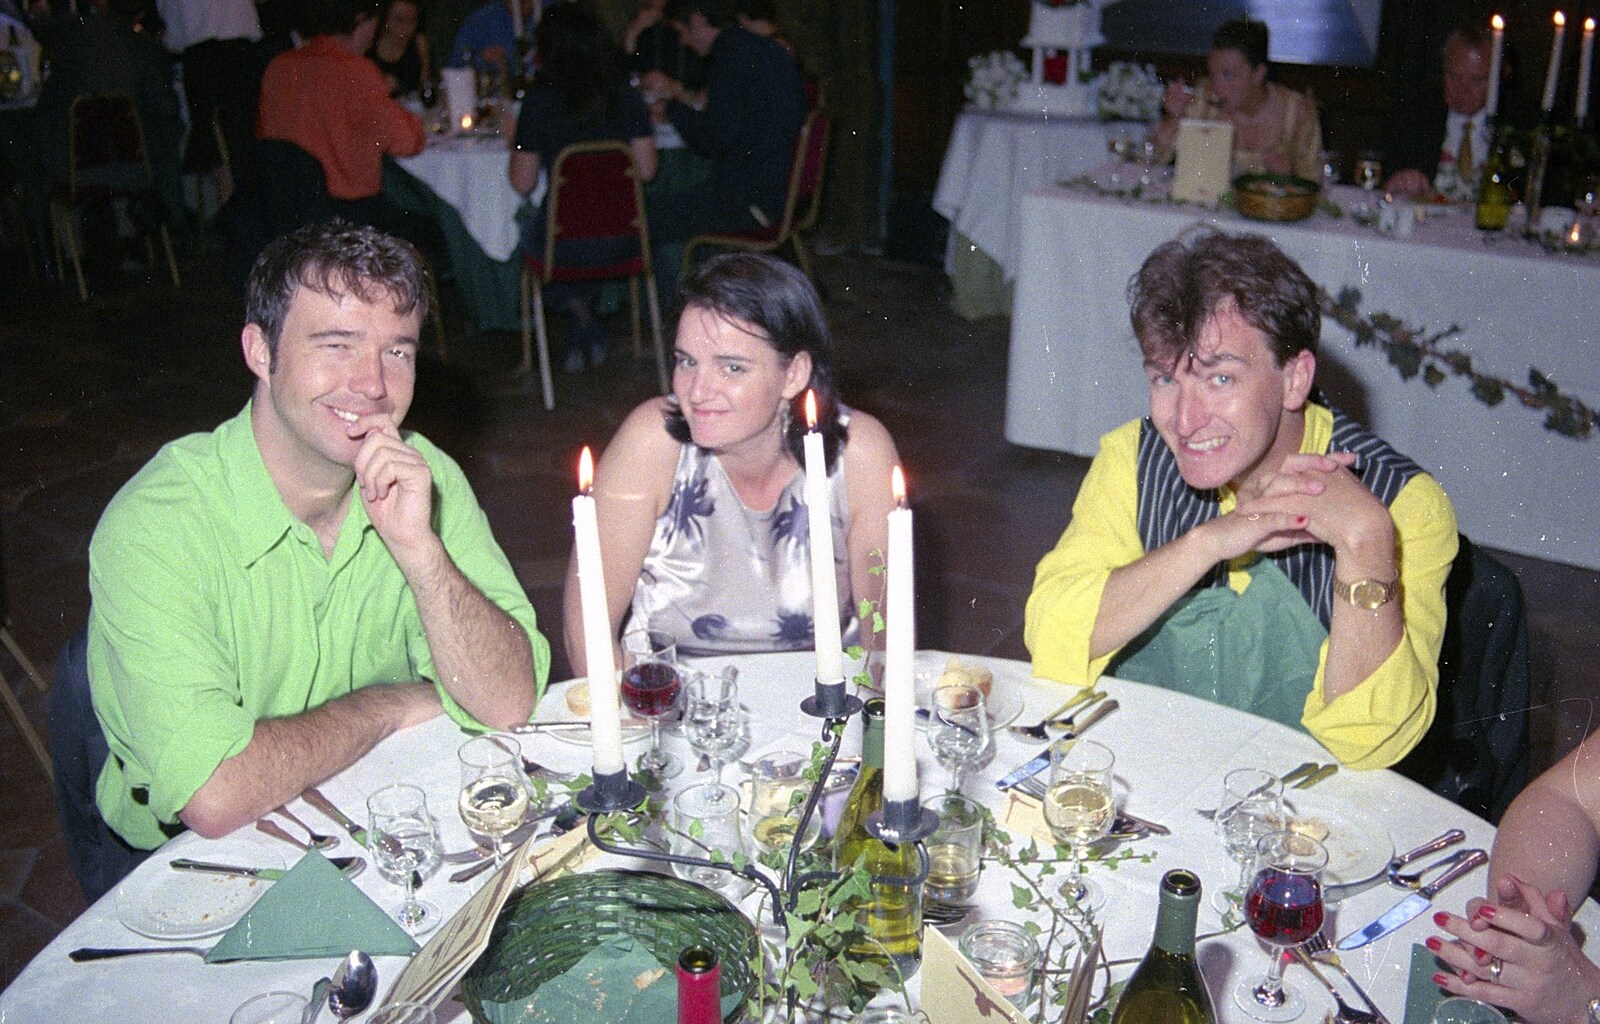 Stuart and Sarah's CISU Wedding, Naworth Castle, Brampton, Cumbria - 21st September 1996: Tim, Gail and Phil